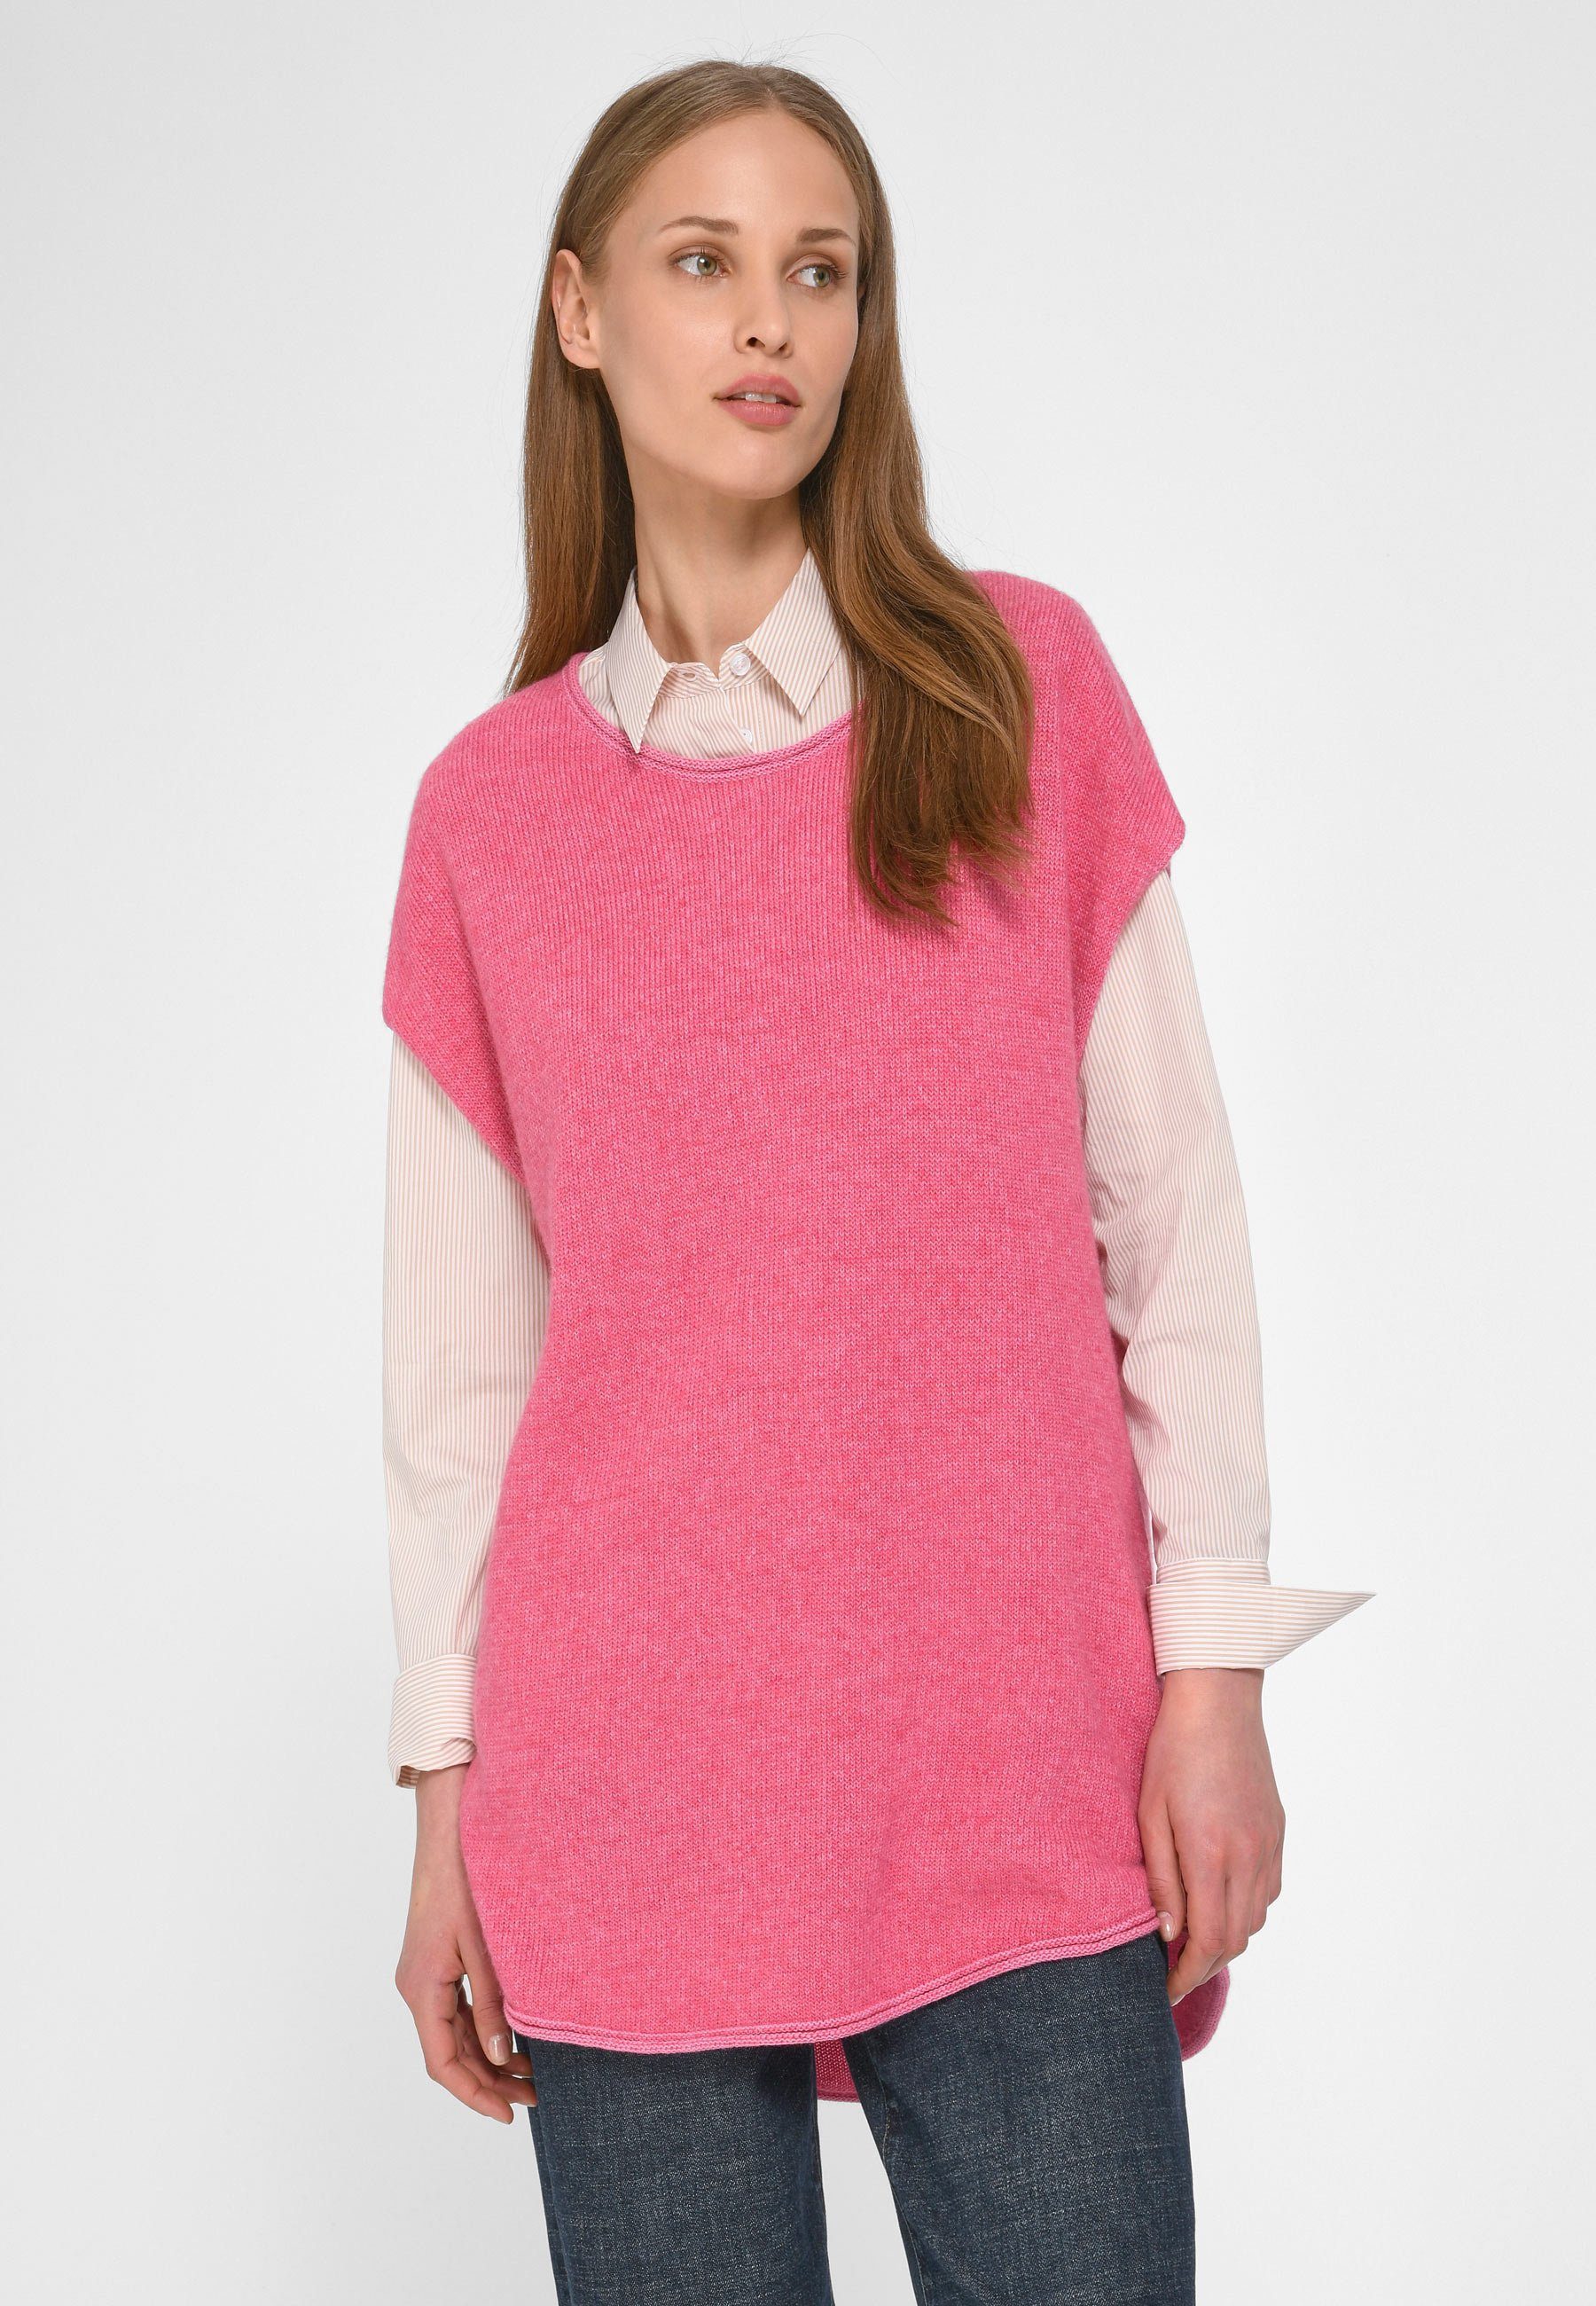 Peter Hahn Strickpullover New Wool mit modernem Design pinkmeliert